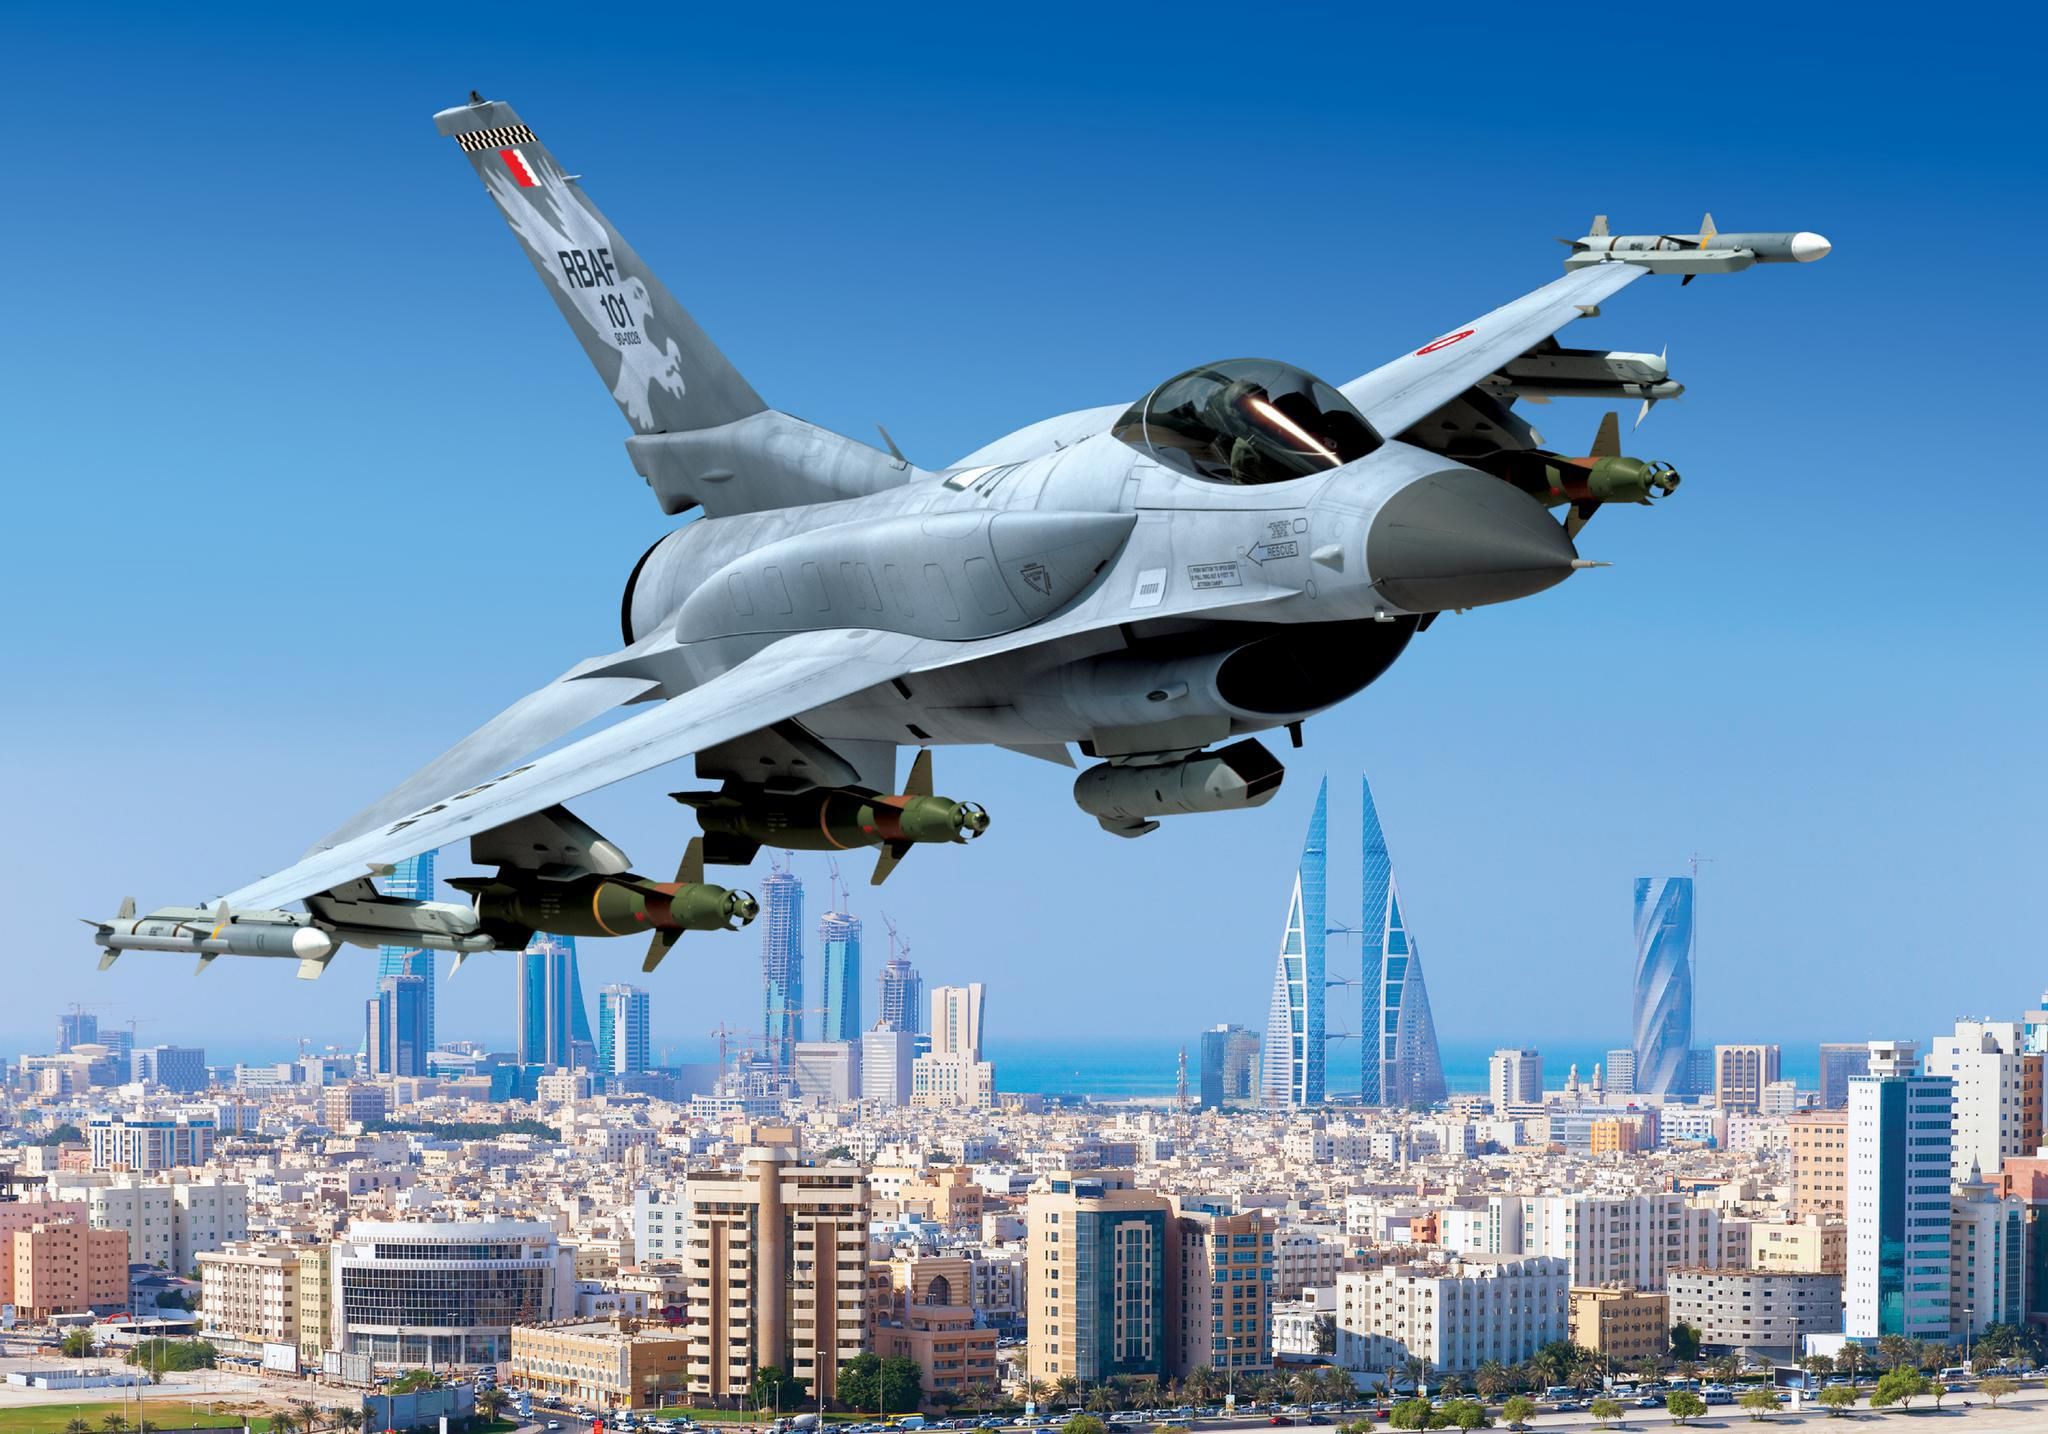 Bahrain to Procure 16 New F-16 Block 70 Aircraft